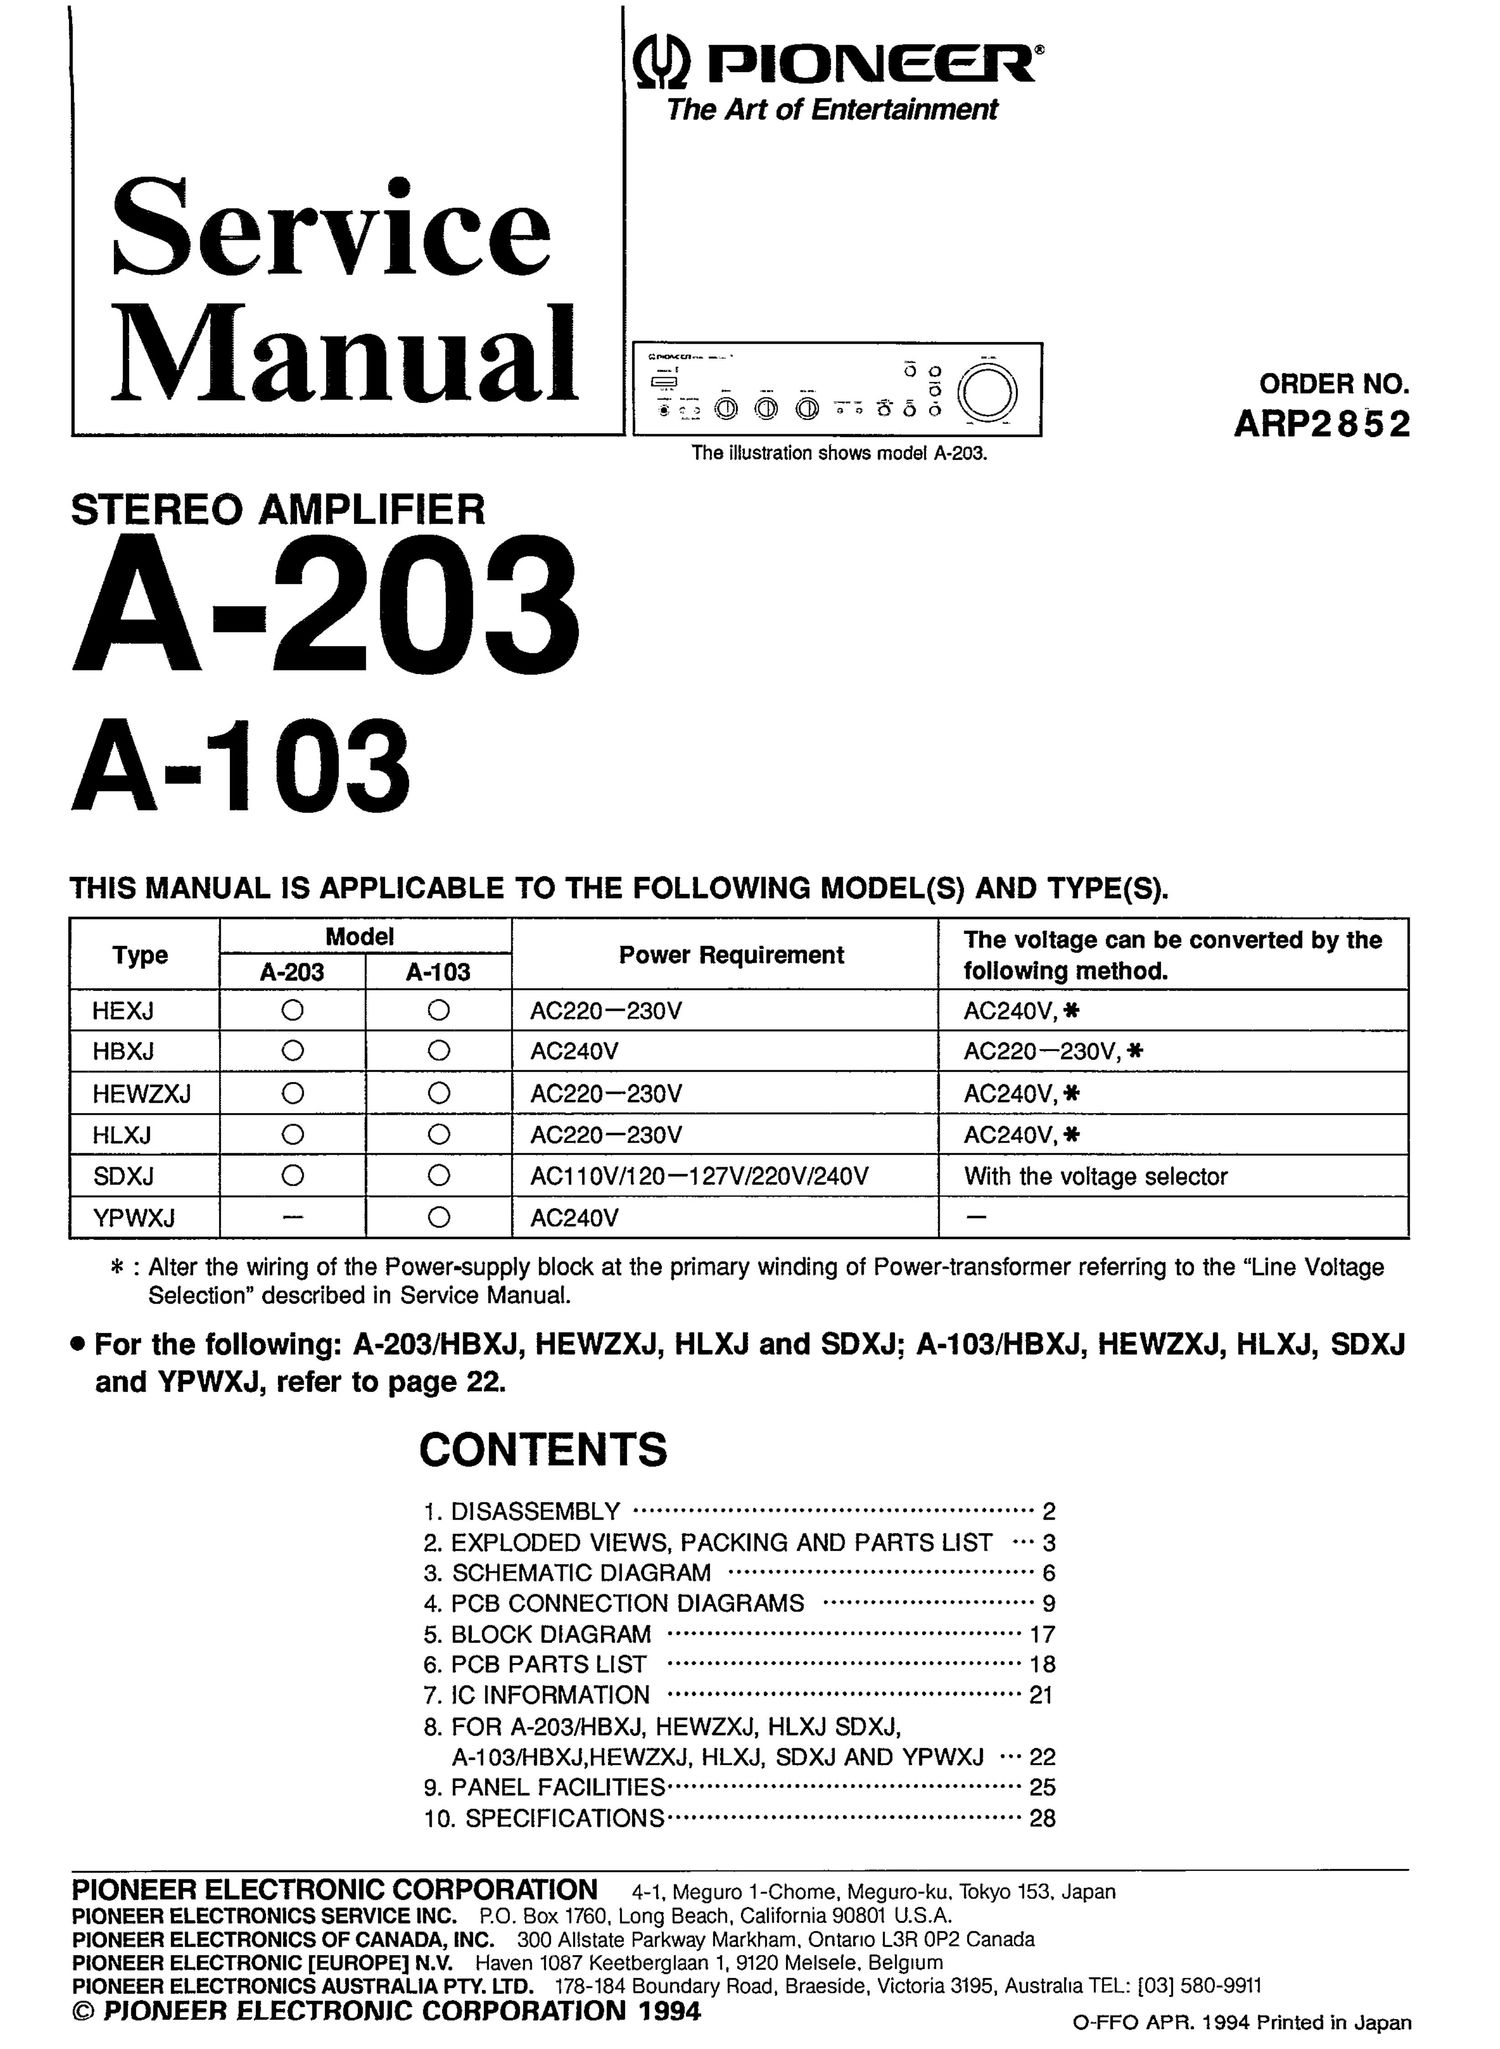 pioneer a 203 service manual